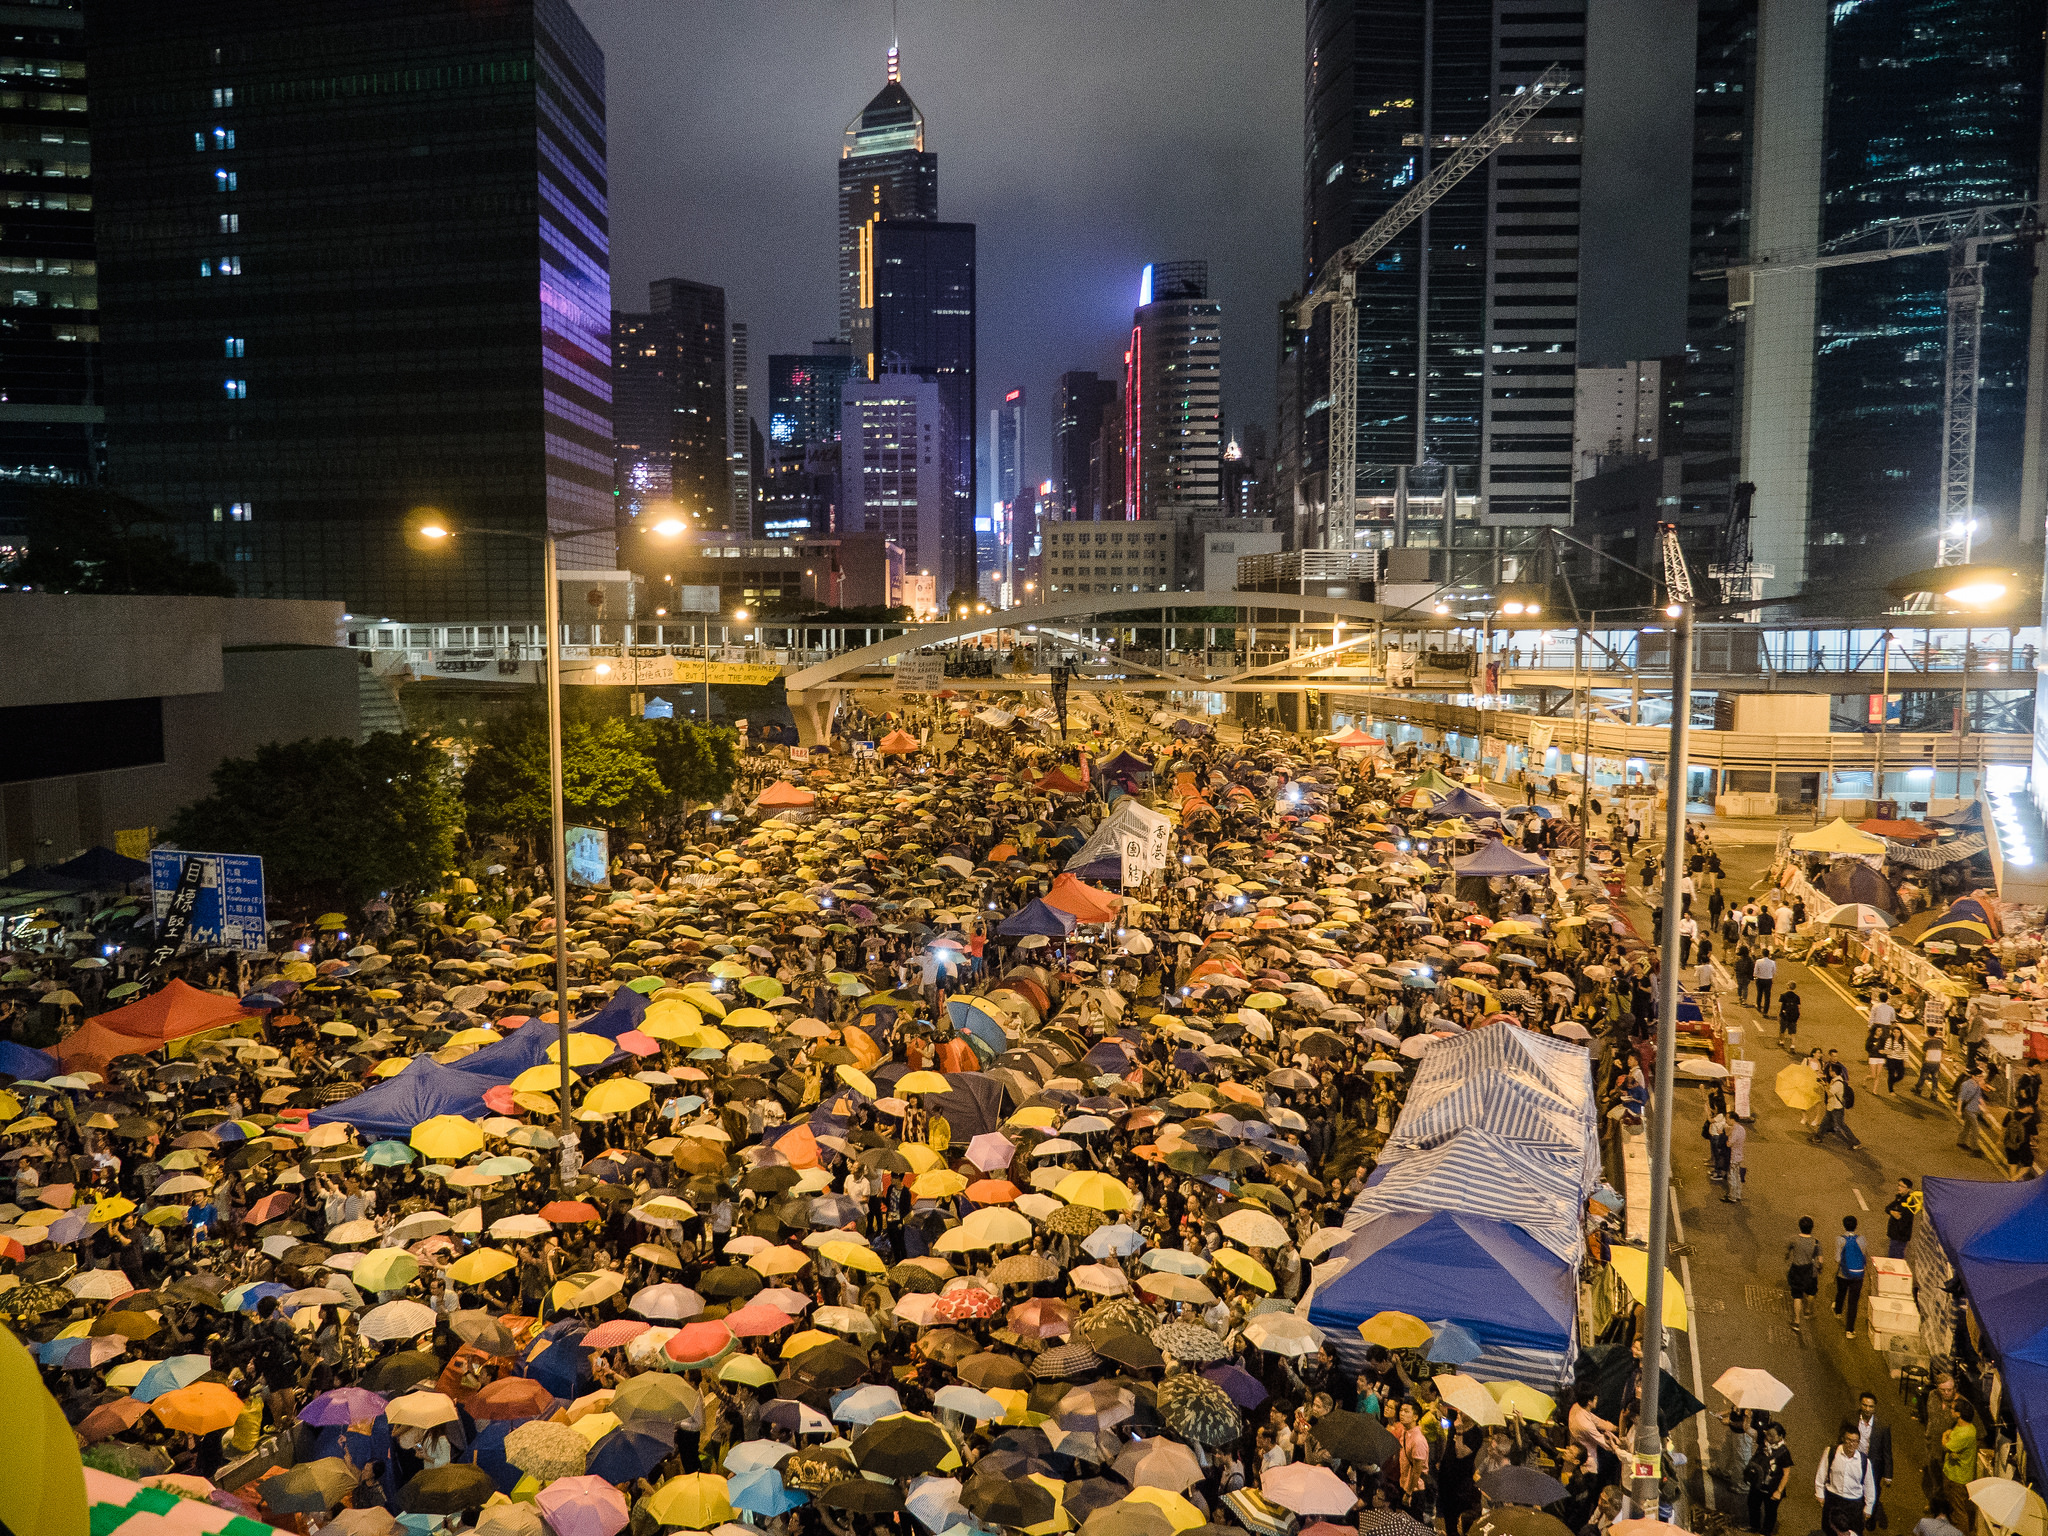 Umbrella Movement in Hong Kong